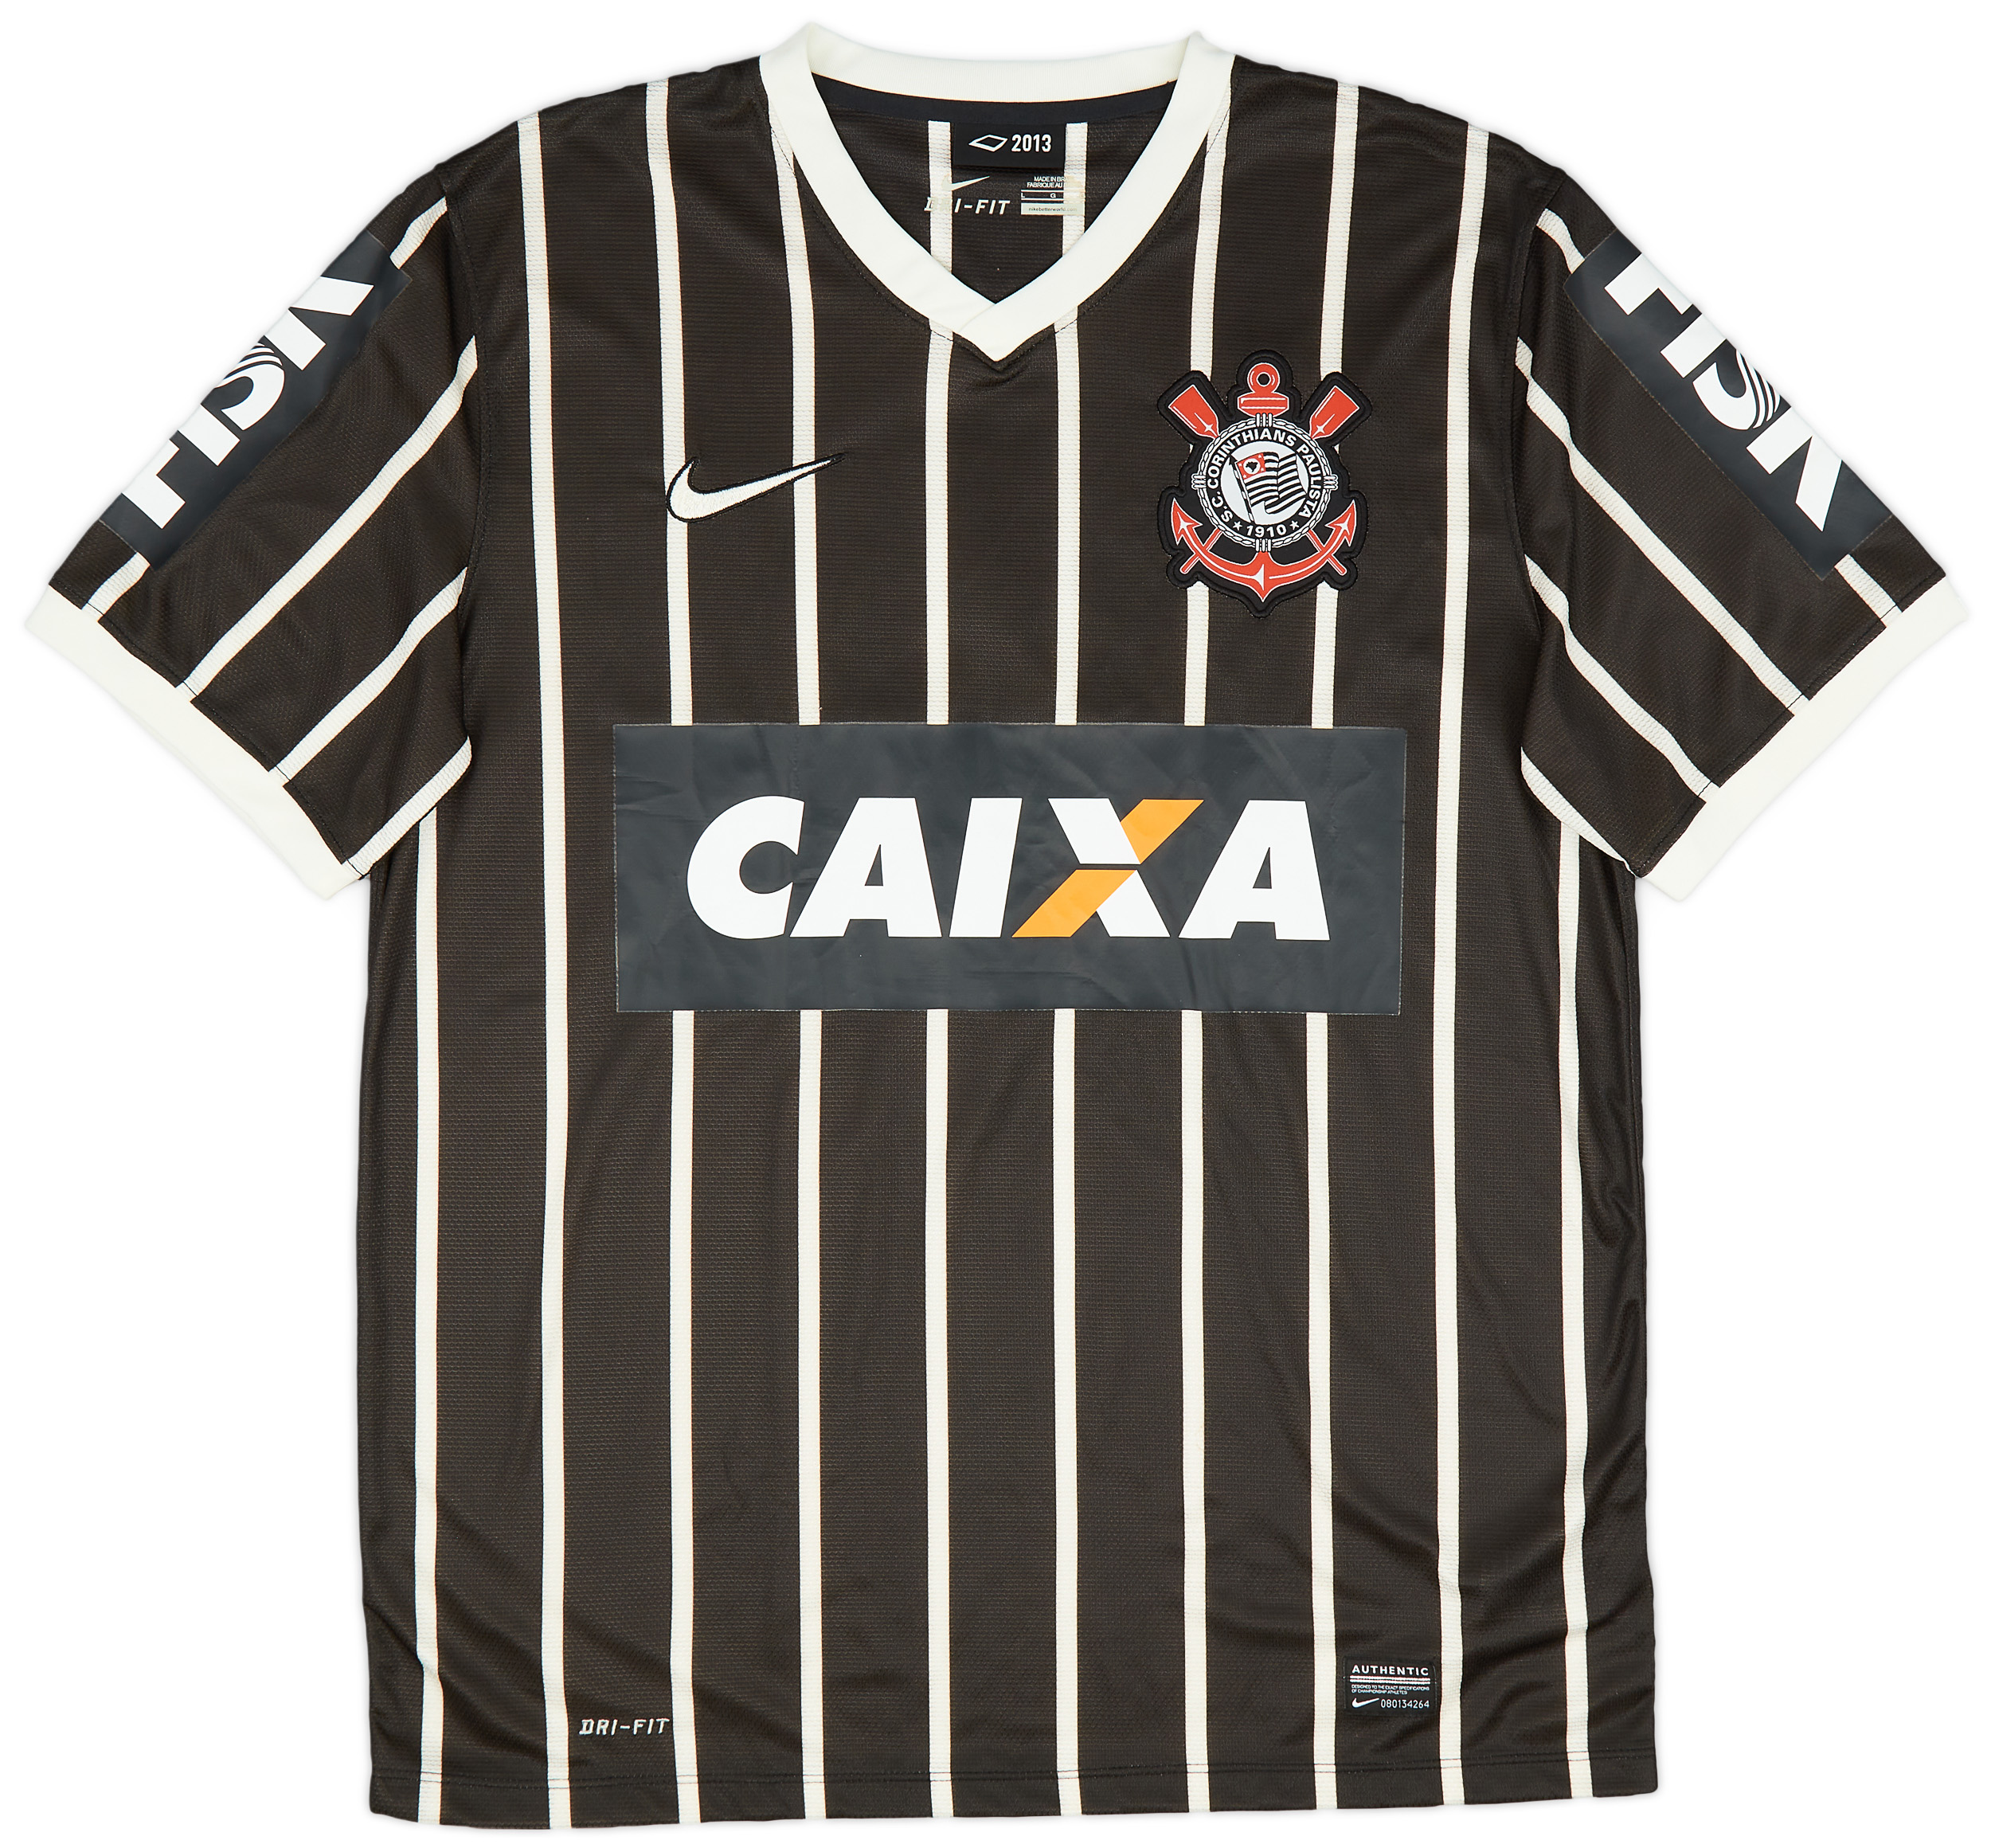 2013 Corinthians Away Shirt - 8/10 - ()